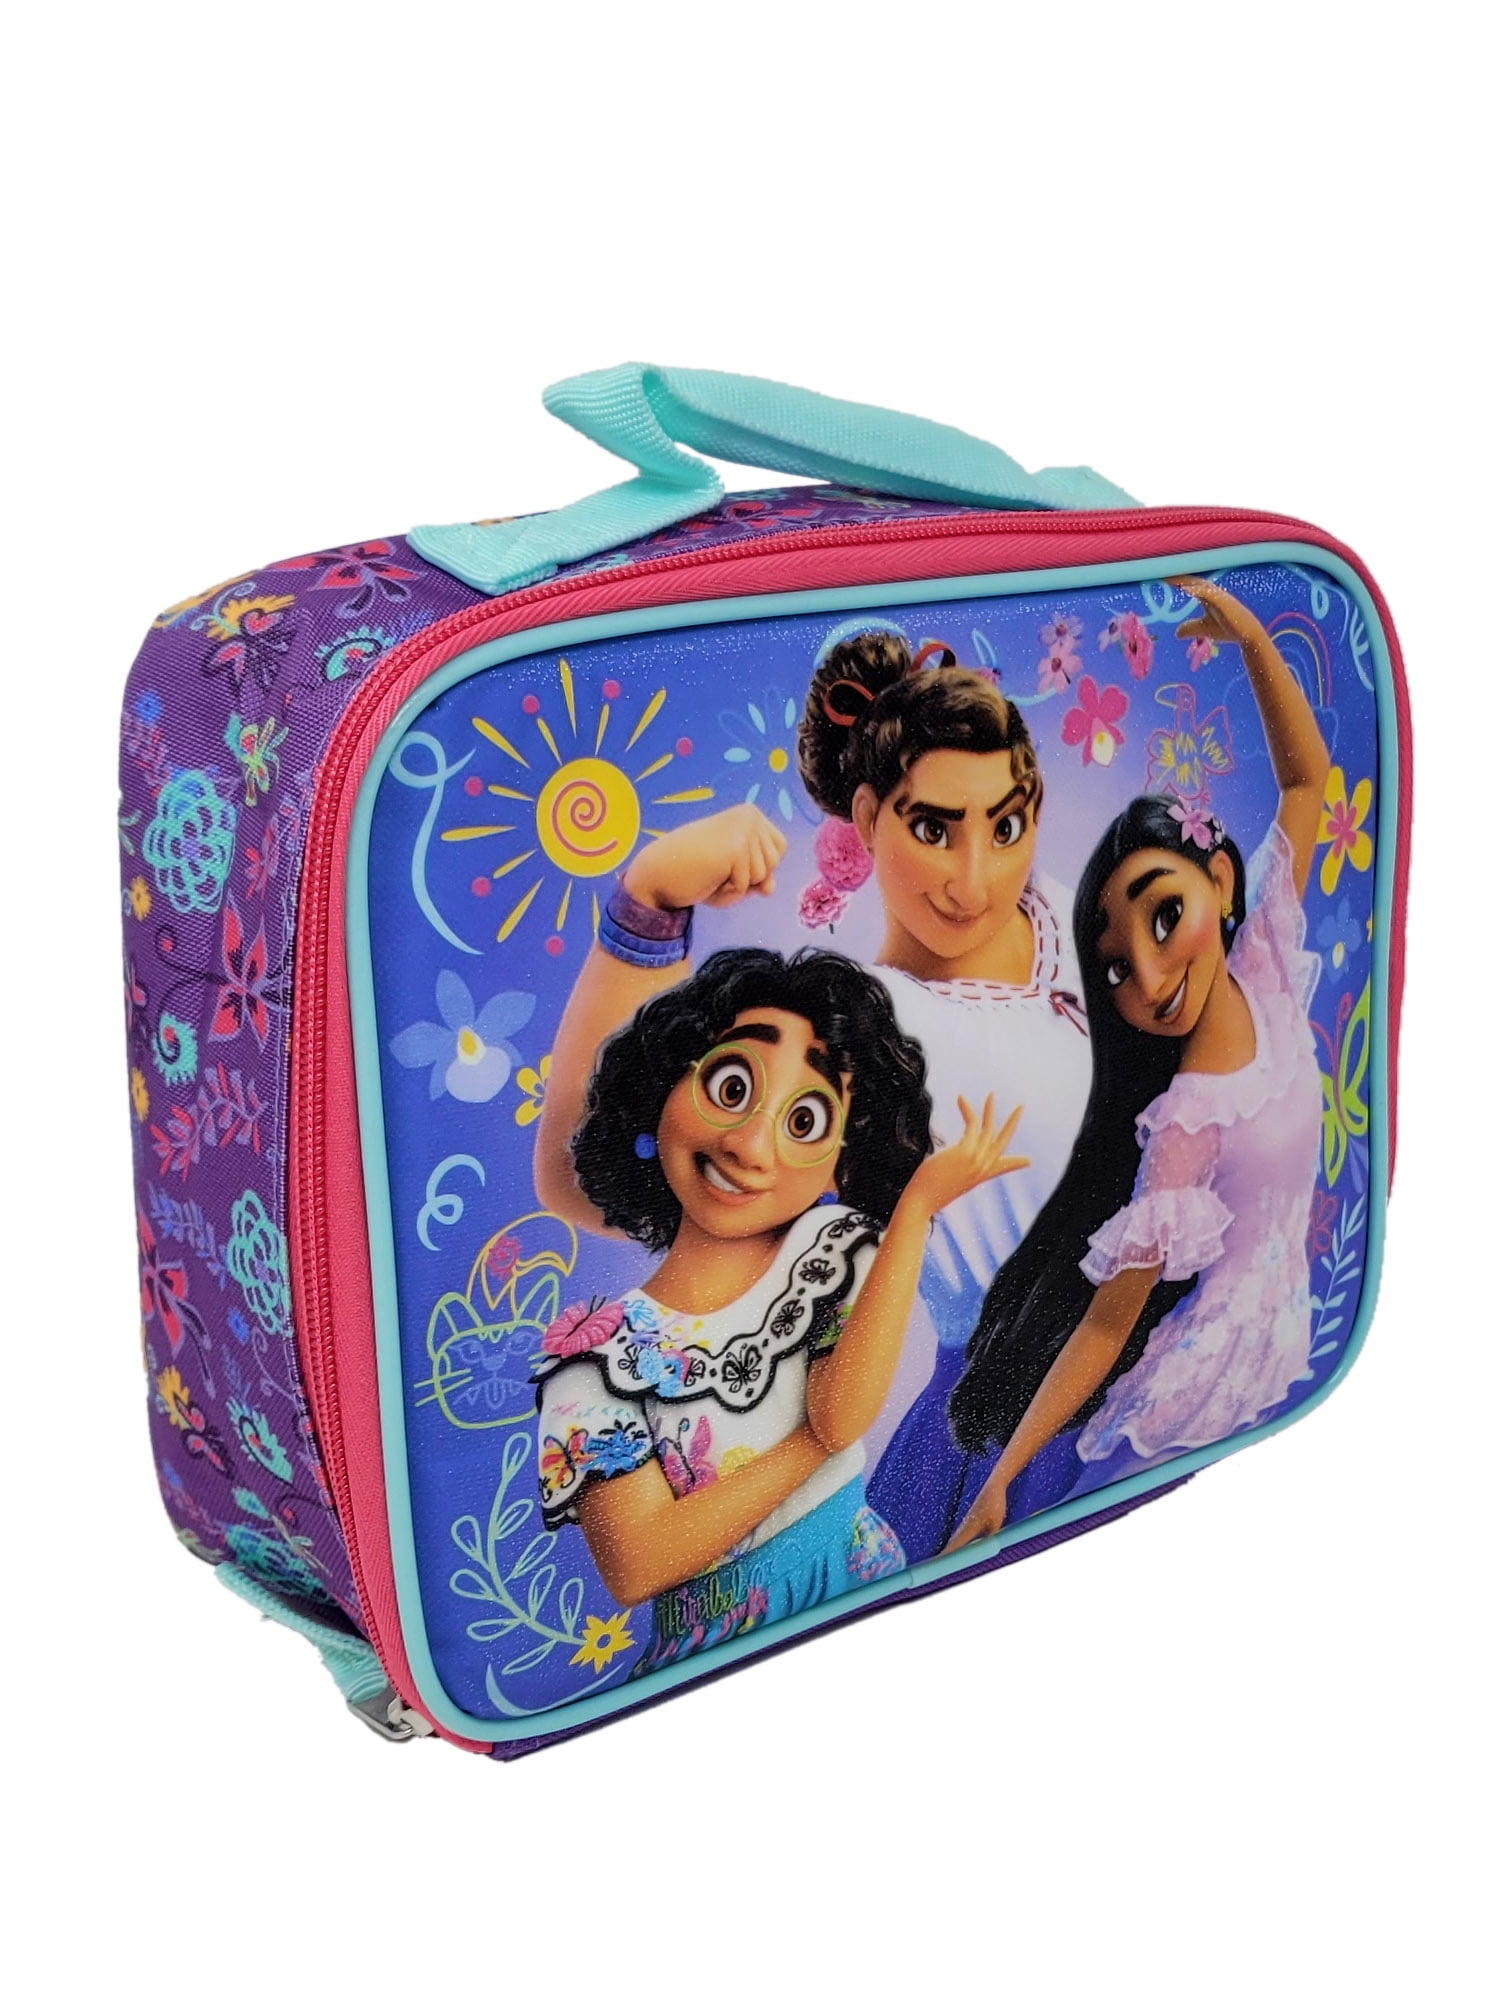 Encanto Insulated Lunch Bag Disney Mirabel Isabela Luisa Madrigal Family 